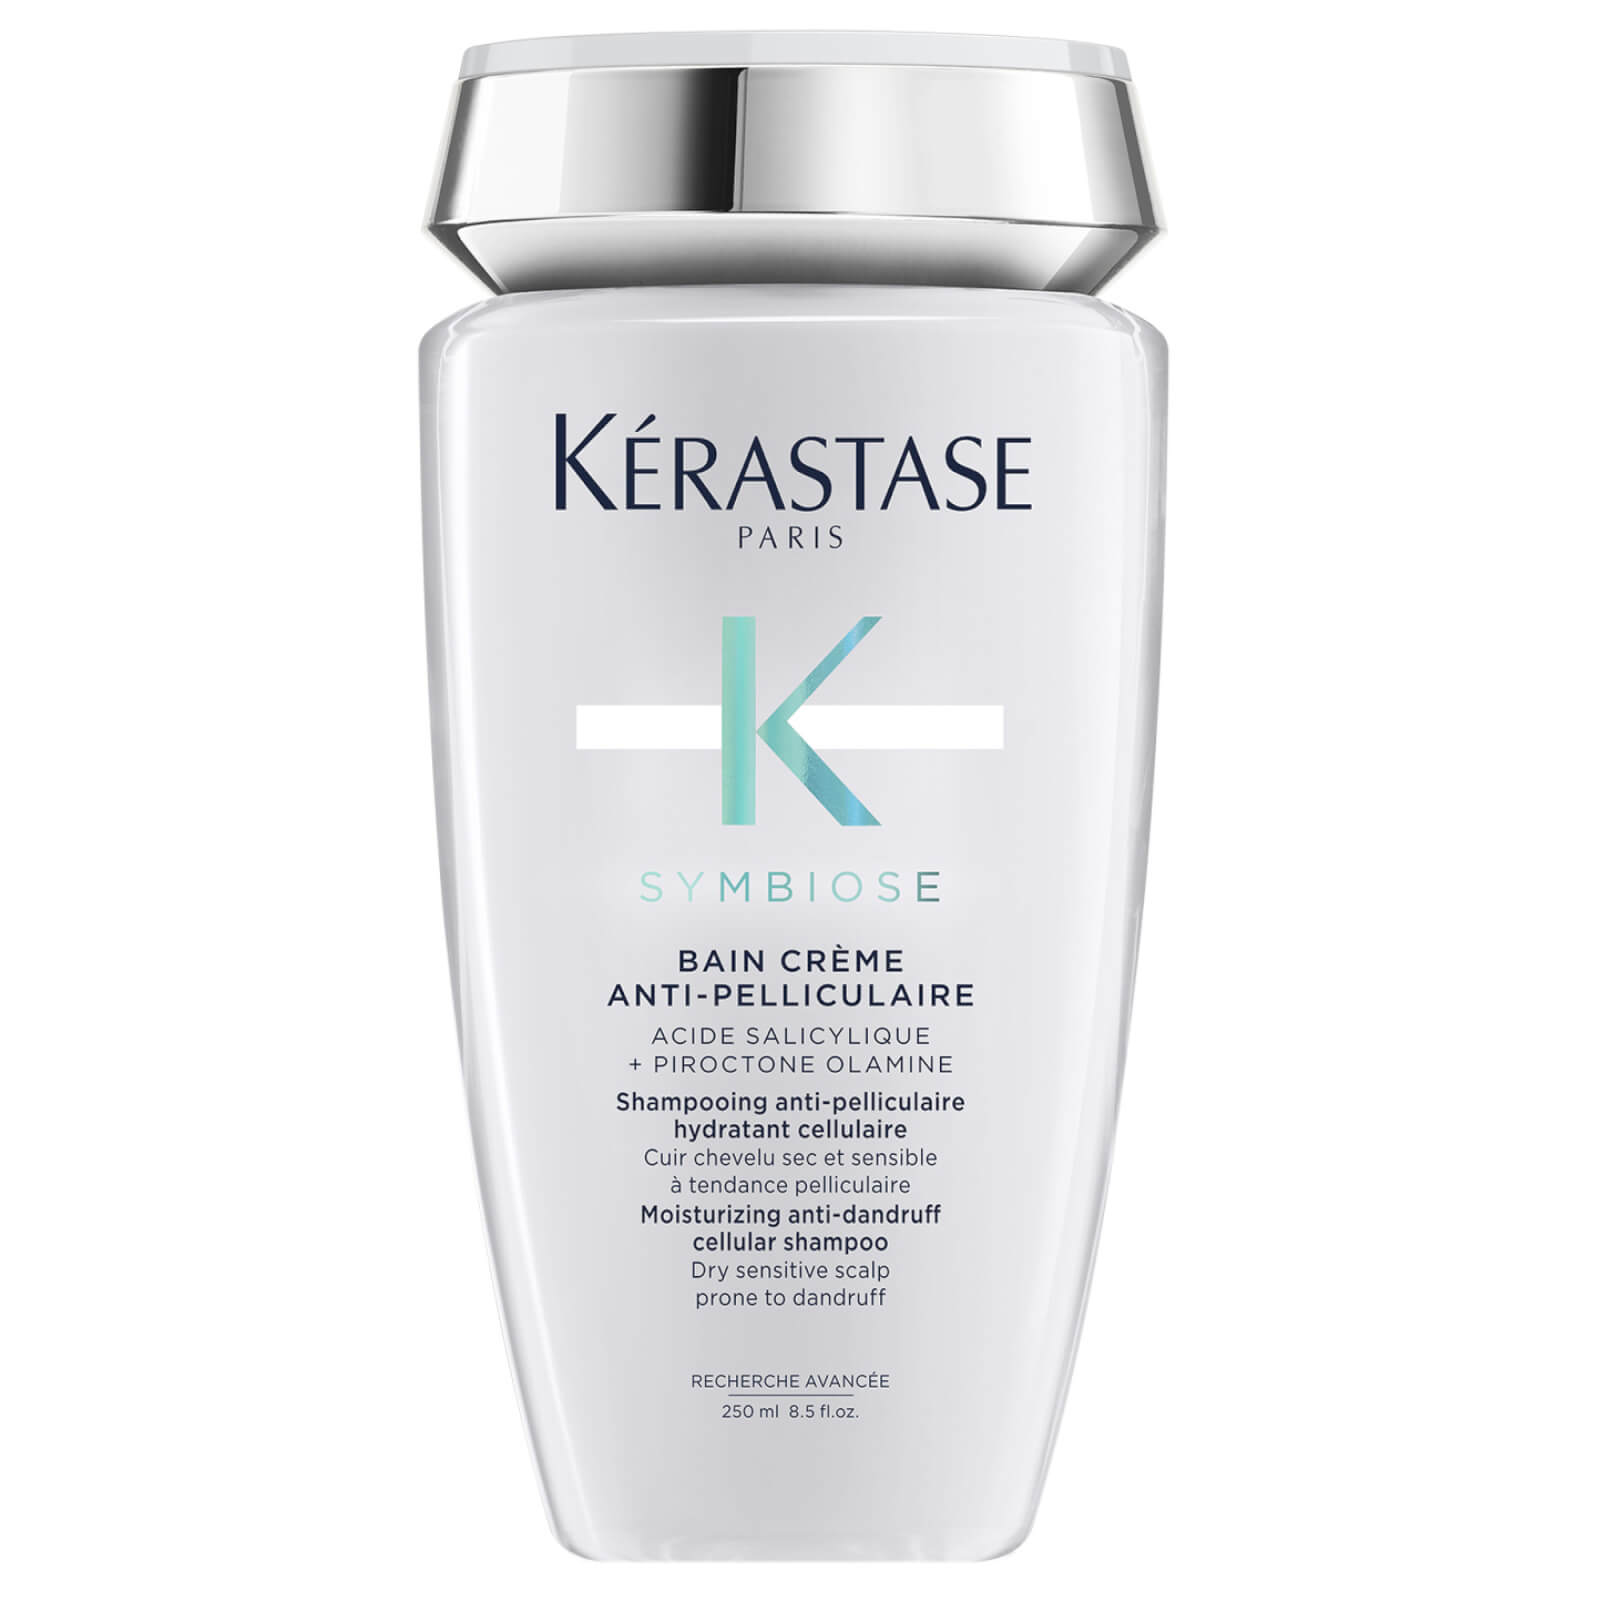 Image of Kérastase Symbiose Moisturising Anti-Dandruff Cellular Shampoo, For Dry Sensitive Scalp, Prone To Dandruff, 250ml